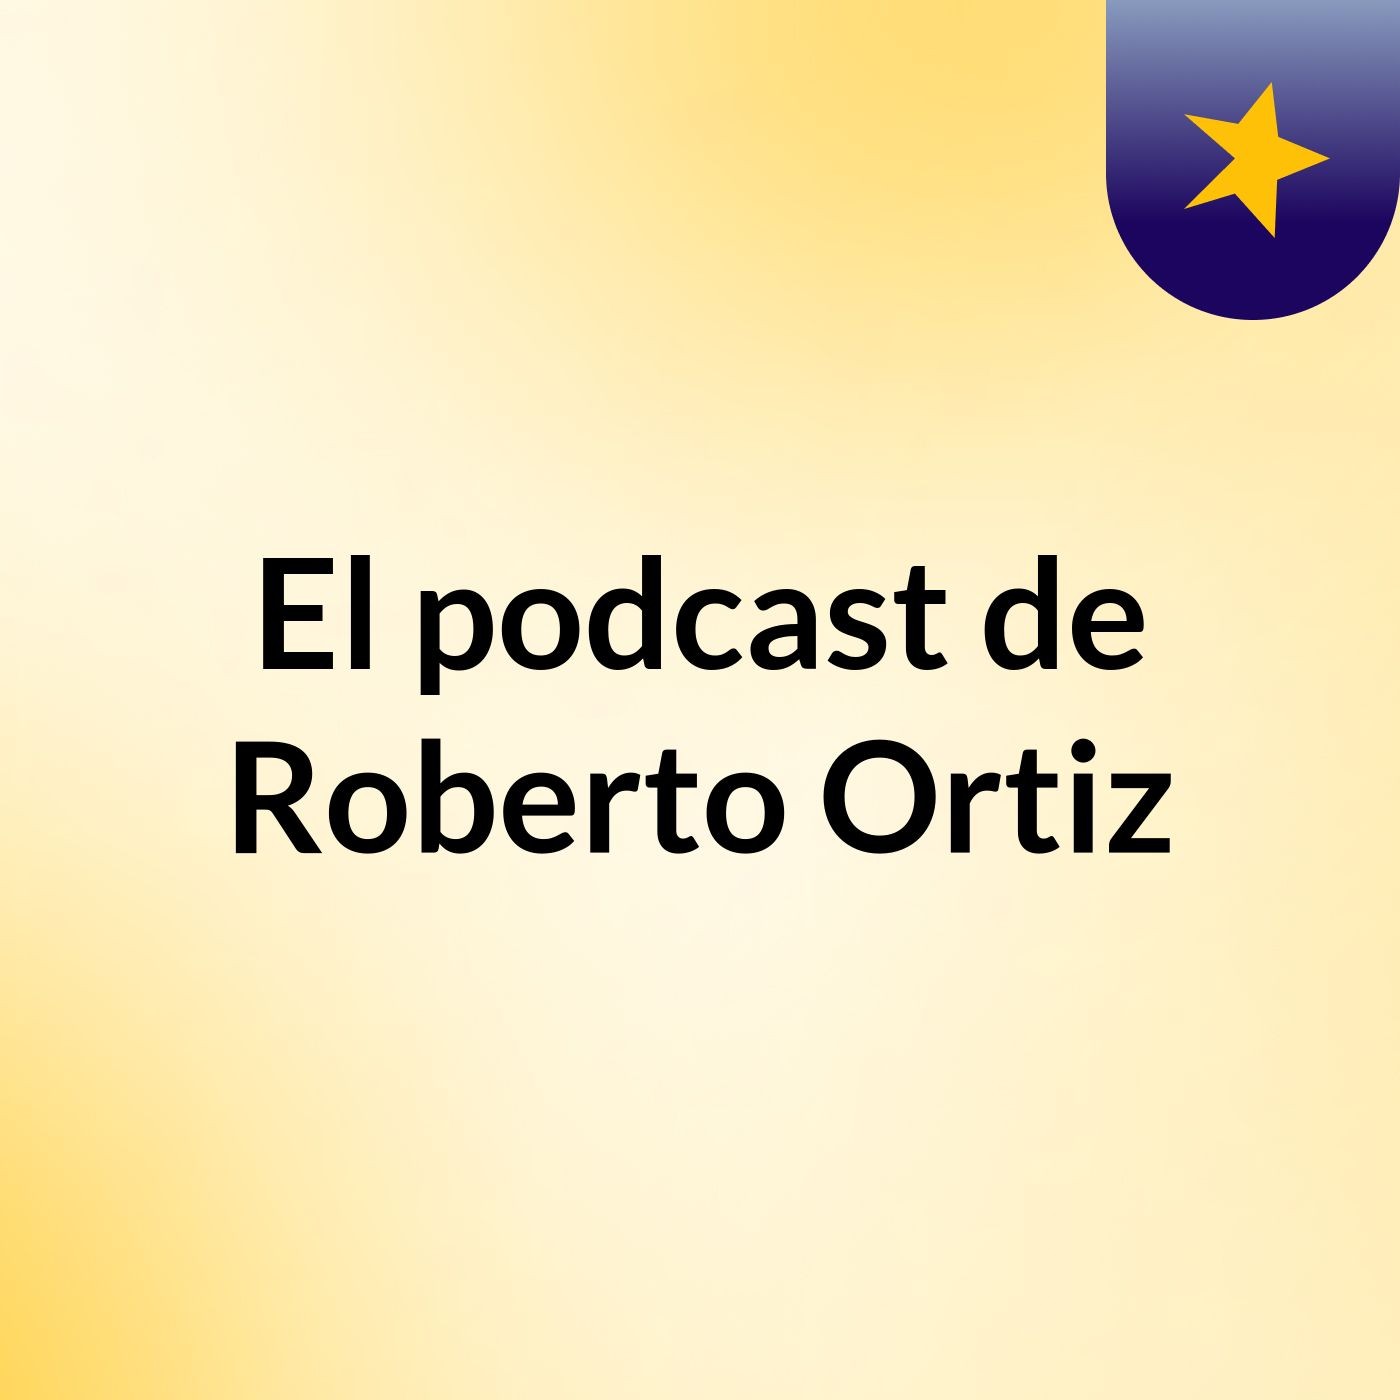 El podcast de Roberto Ortiz